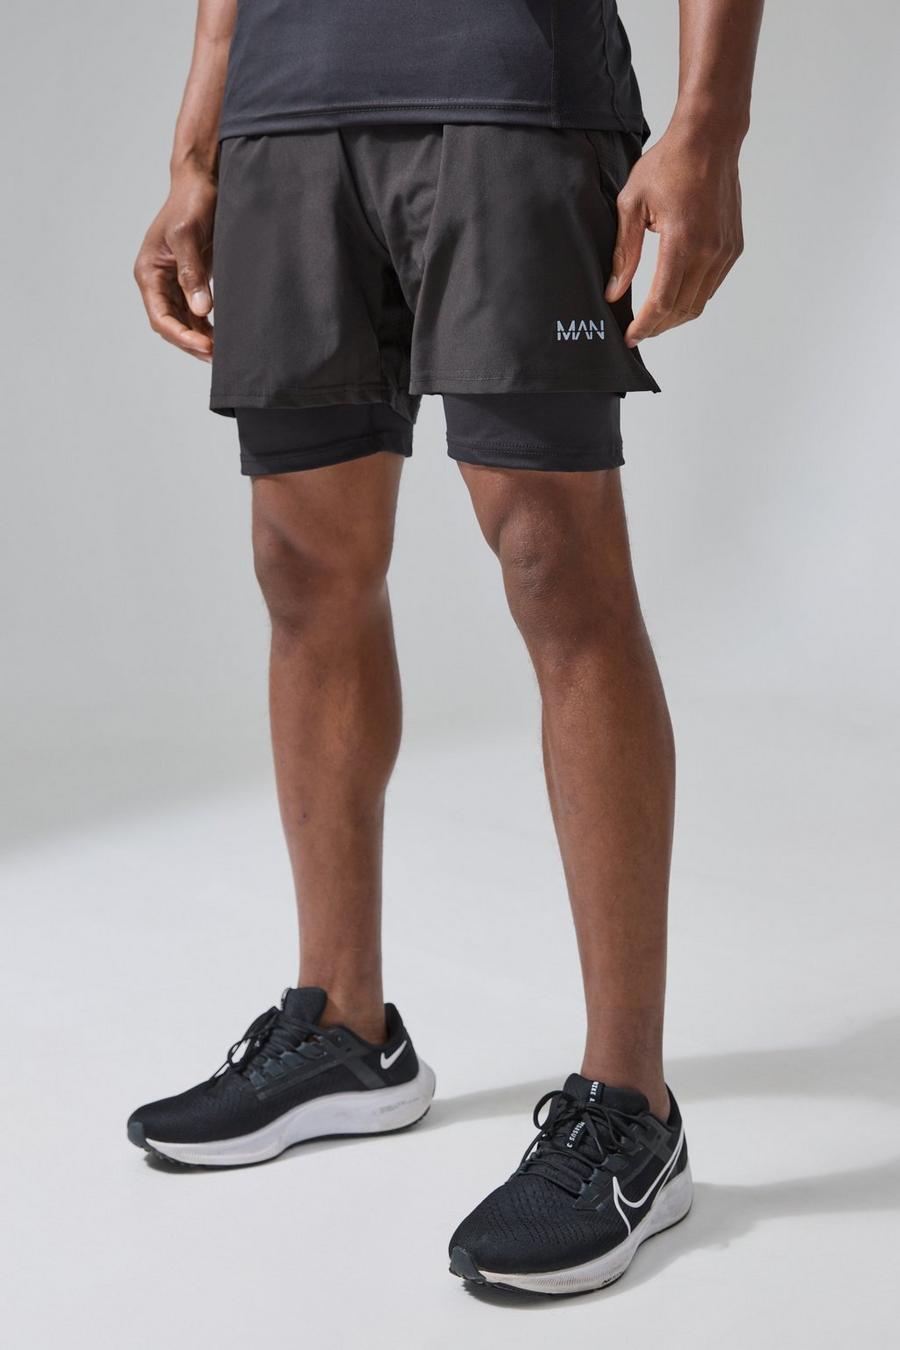 Man Active 2-in-1 Mesh-Shorts, Black image number 1